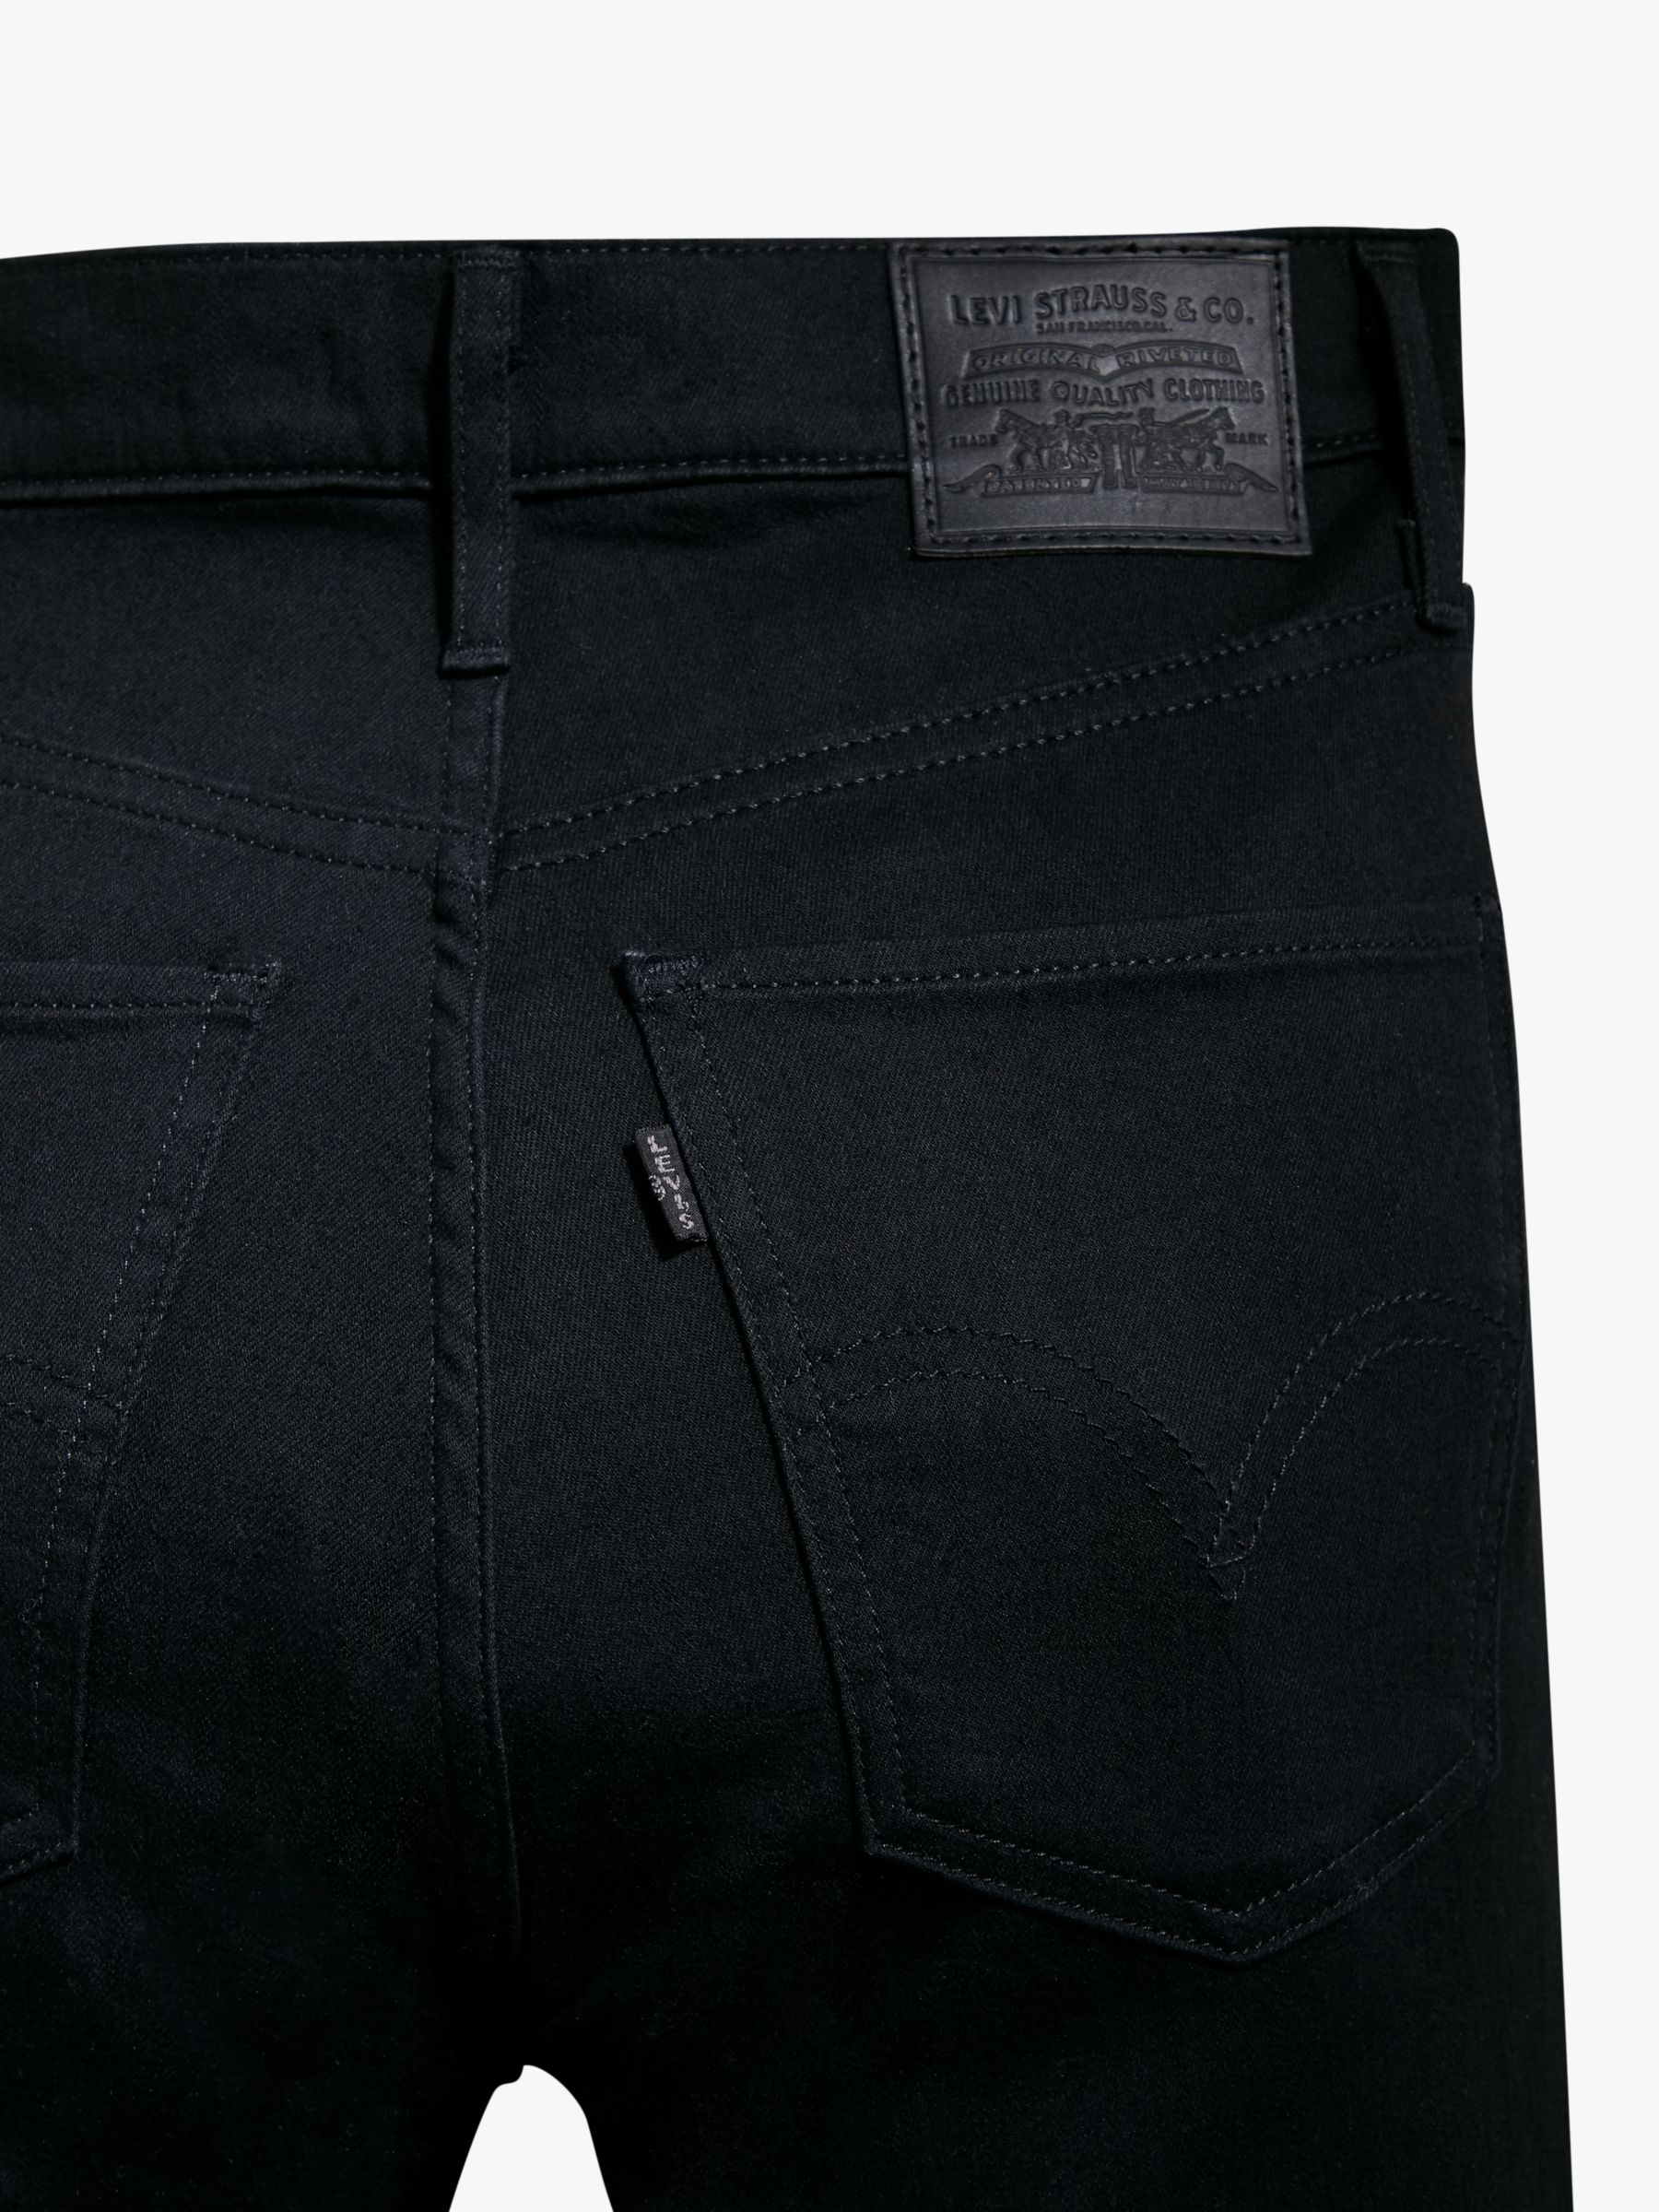 Levi's Mile High Super Skinny Jeans, Celestial at John Lewis & Partners